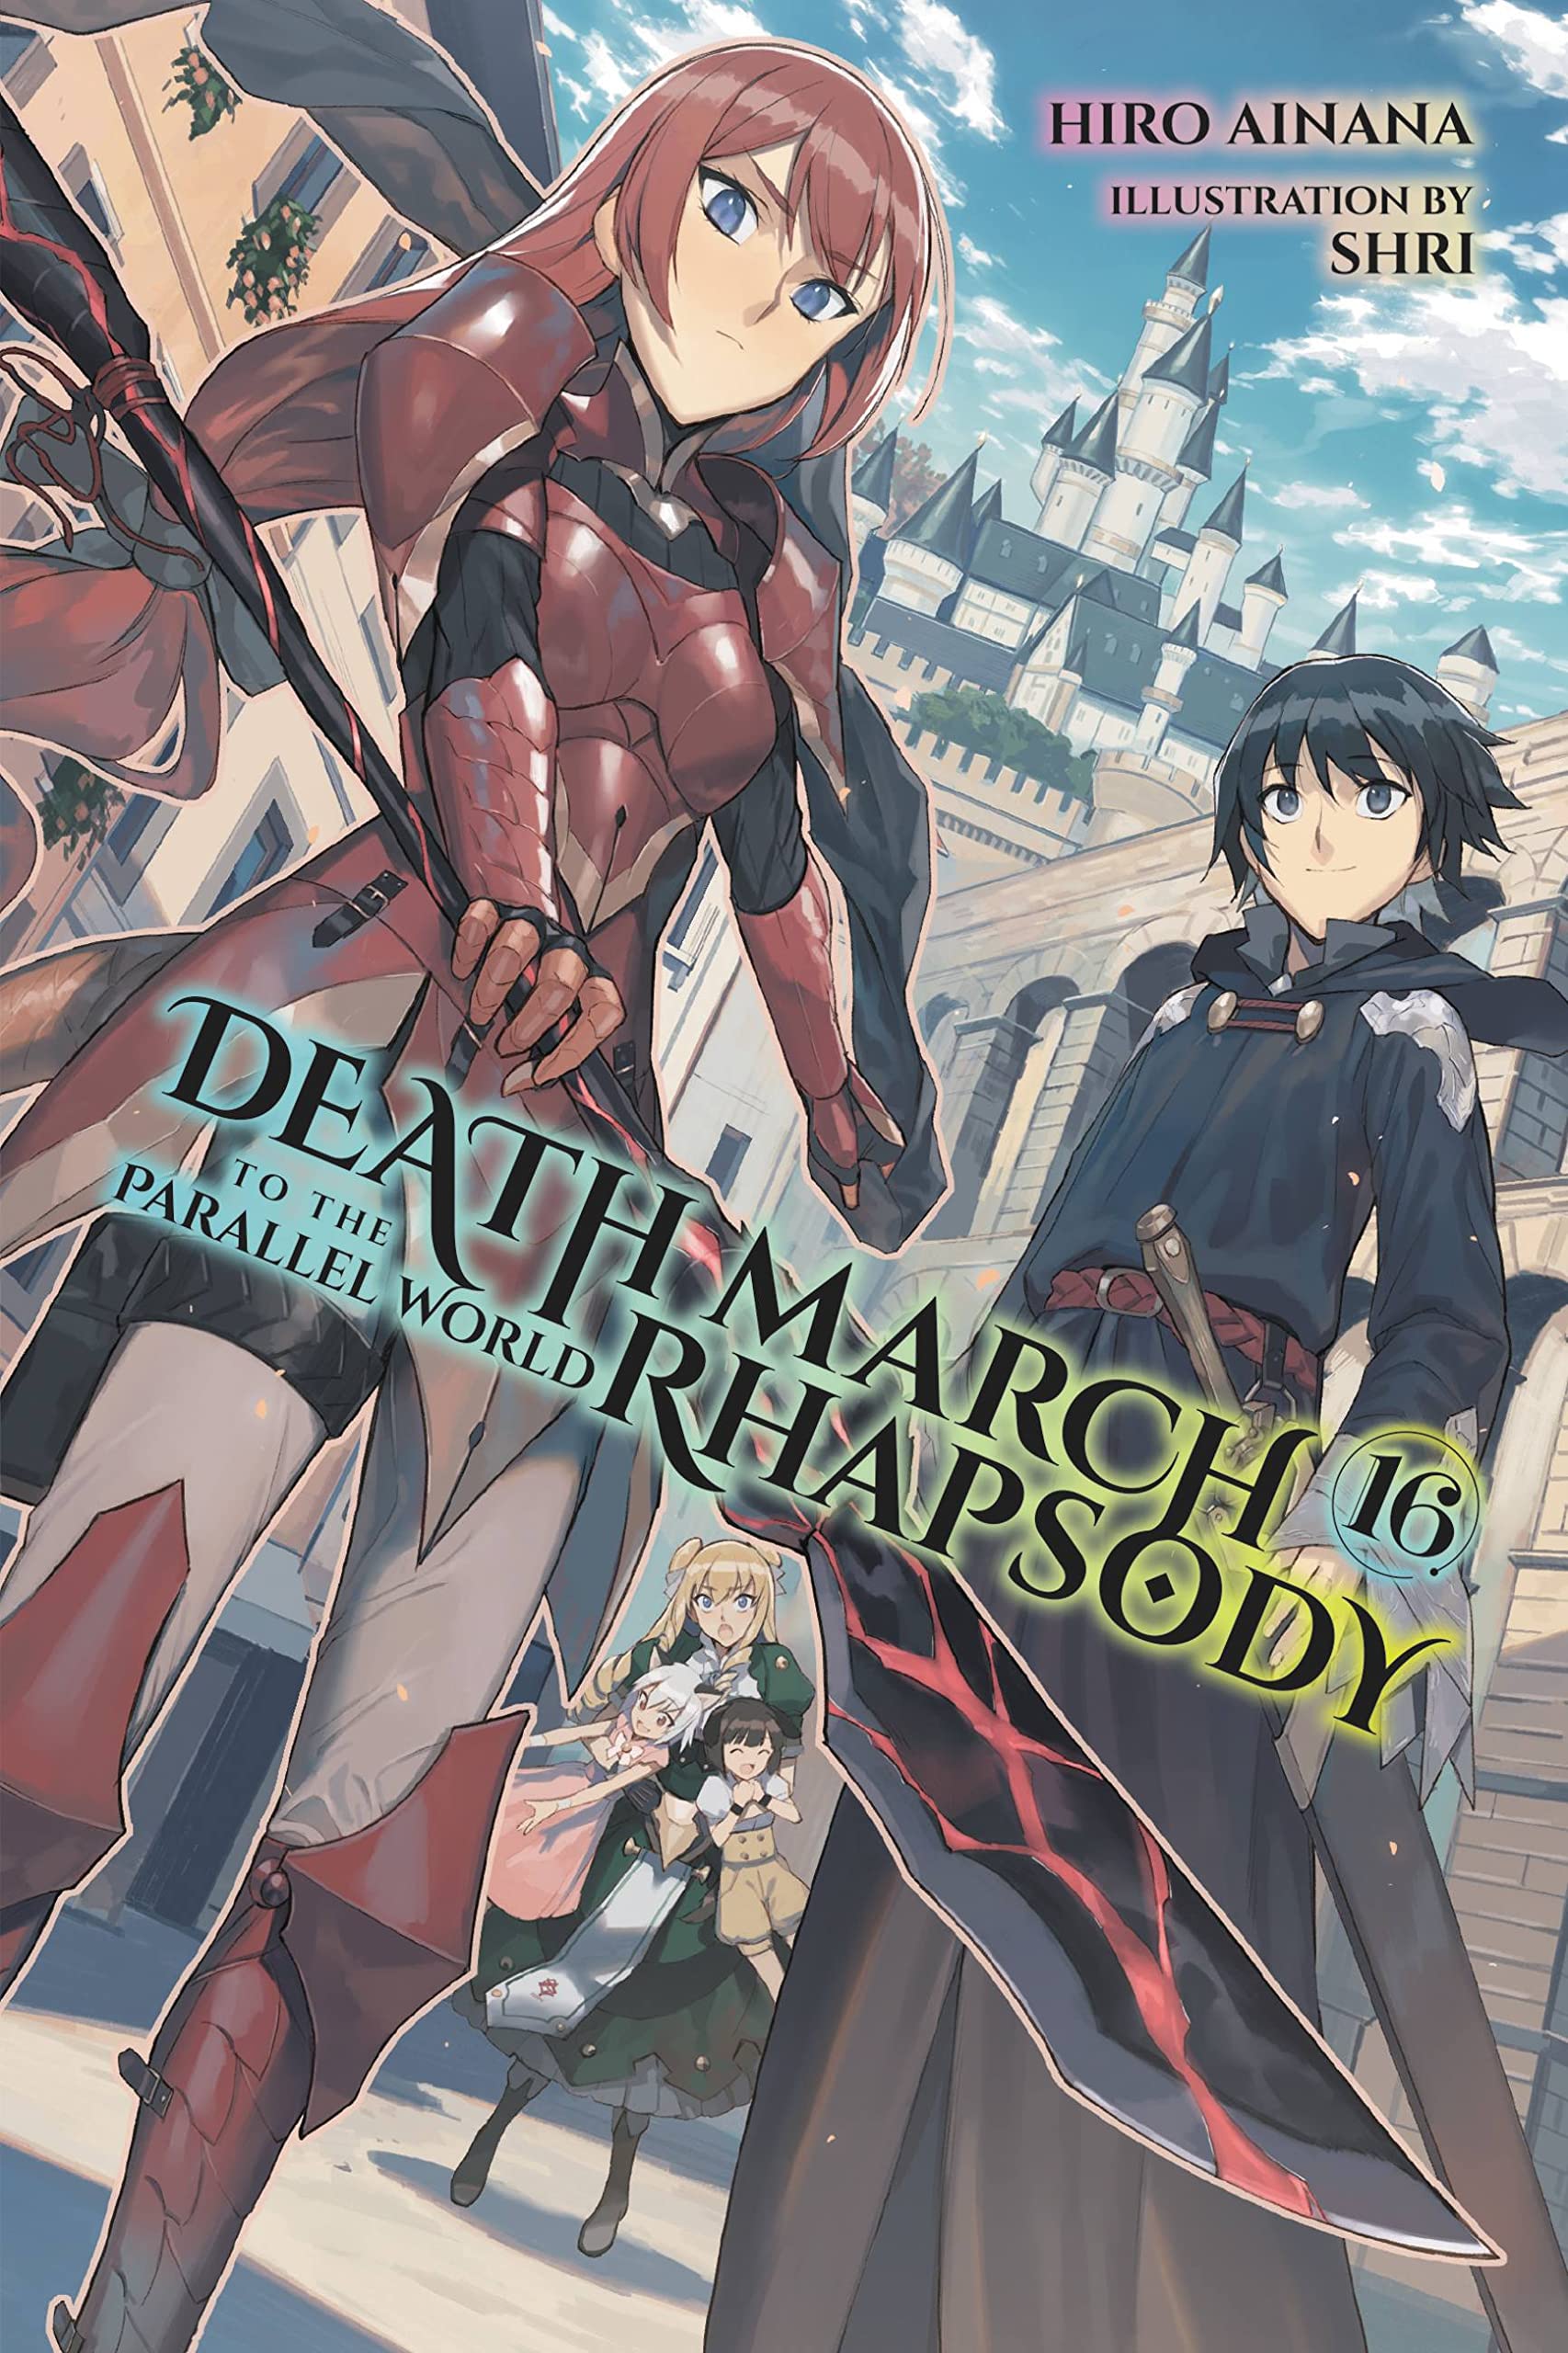 HD wallpaper: Anime, Death March kara Hajimaru Isekai Kyousoukyoku, Pochi (Death  March Kara Hajimaru Isekai Kyousoukyoku)